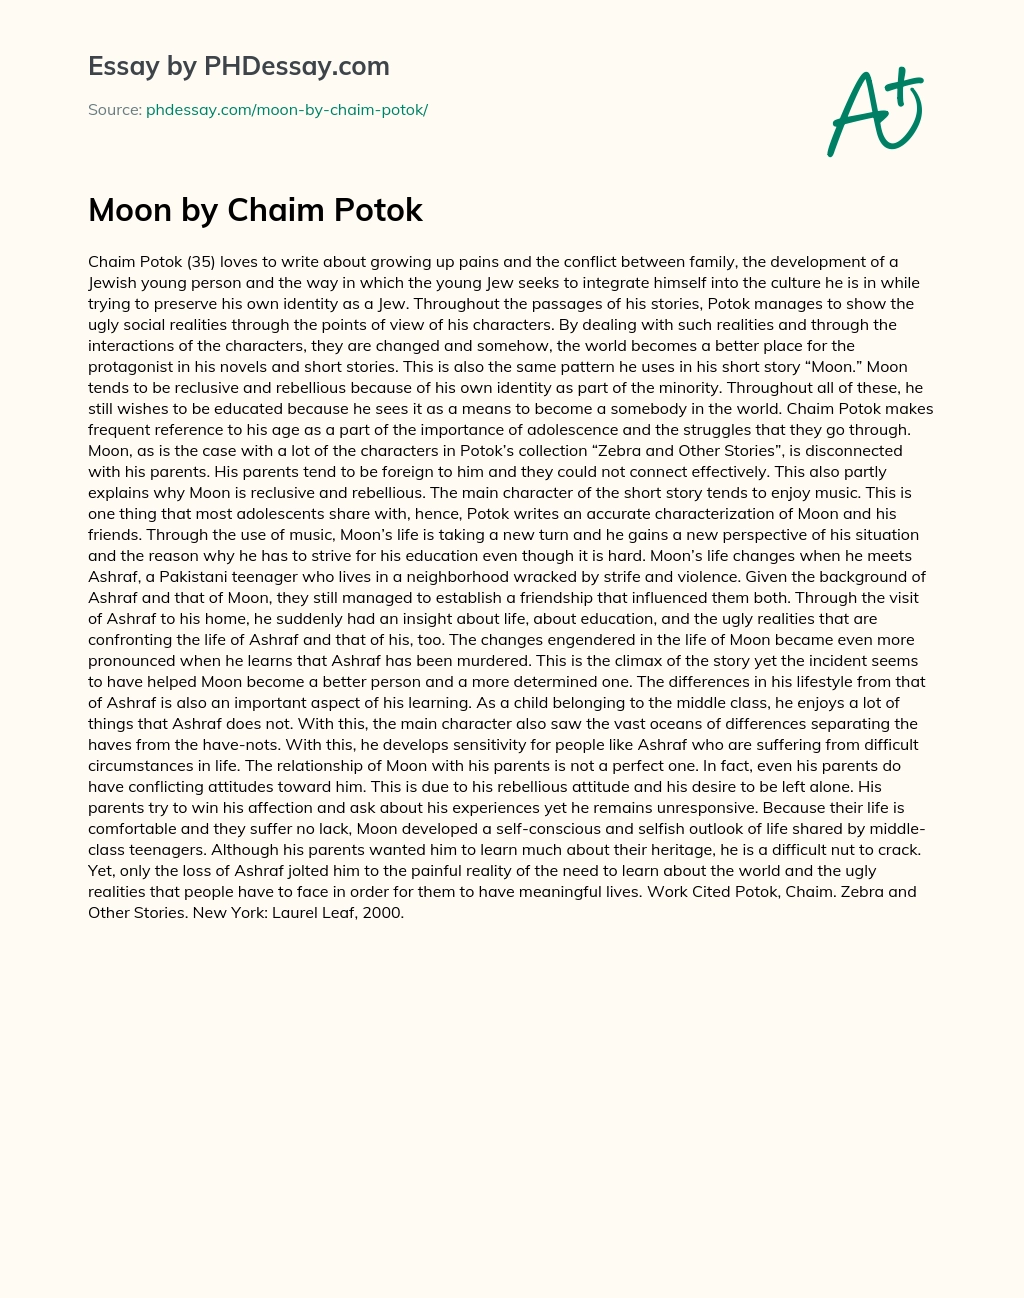 Moon by Chaim Potok essay